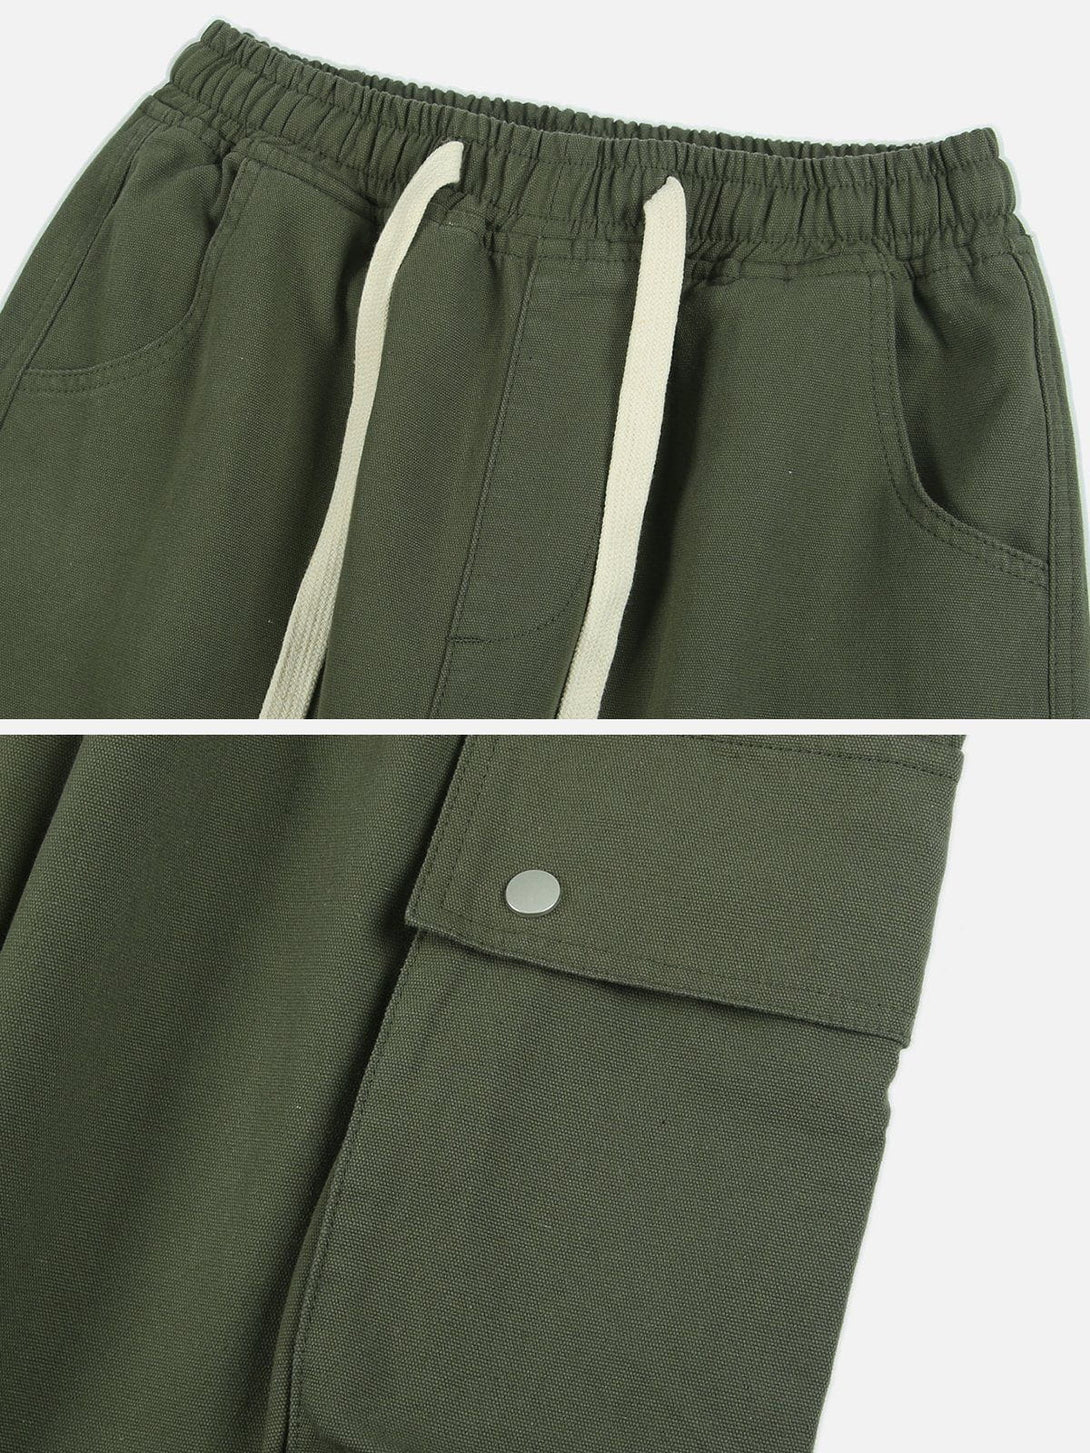 AlanBalen® - Large Pocket Large Drawstring Pants AlanBalen